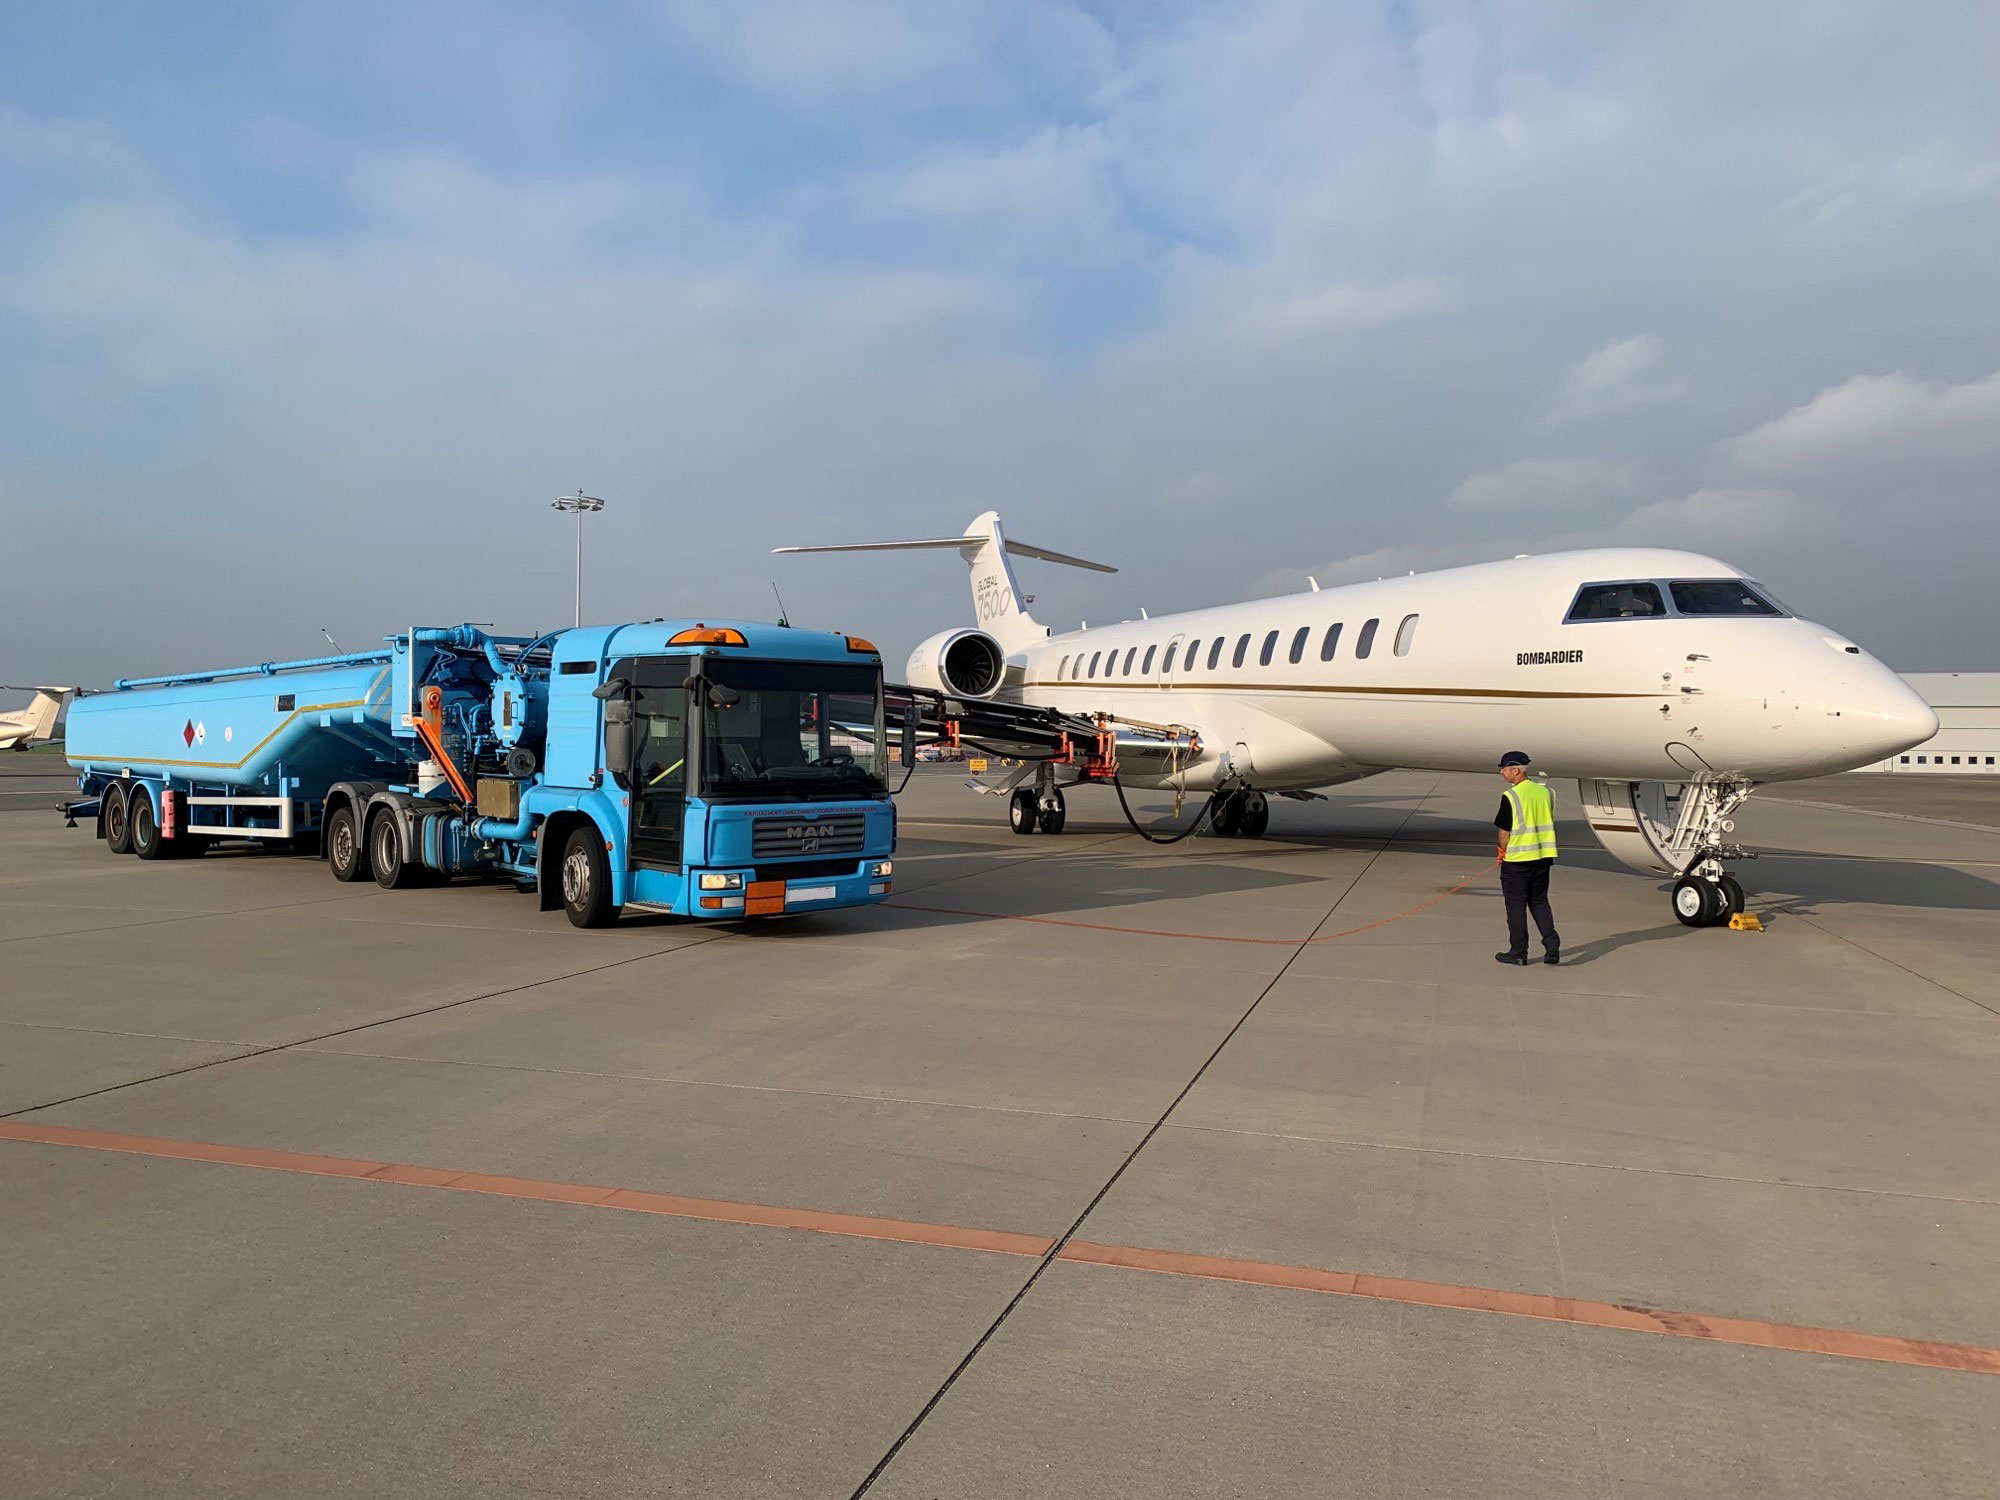 Global 7500 en tournée en Europe utilisant du carburant avion durable (SAF)